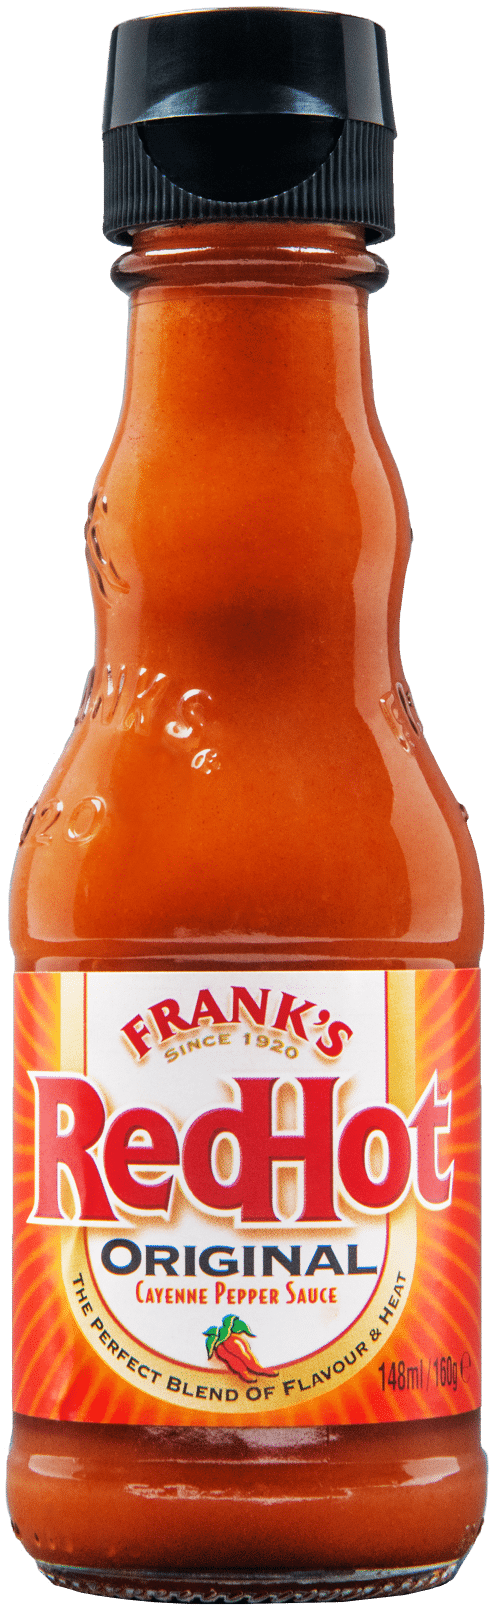 Frank's RedHot Original Cayenne Pepper Sauce - 148ml